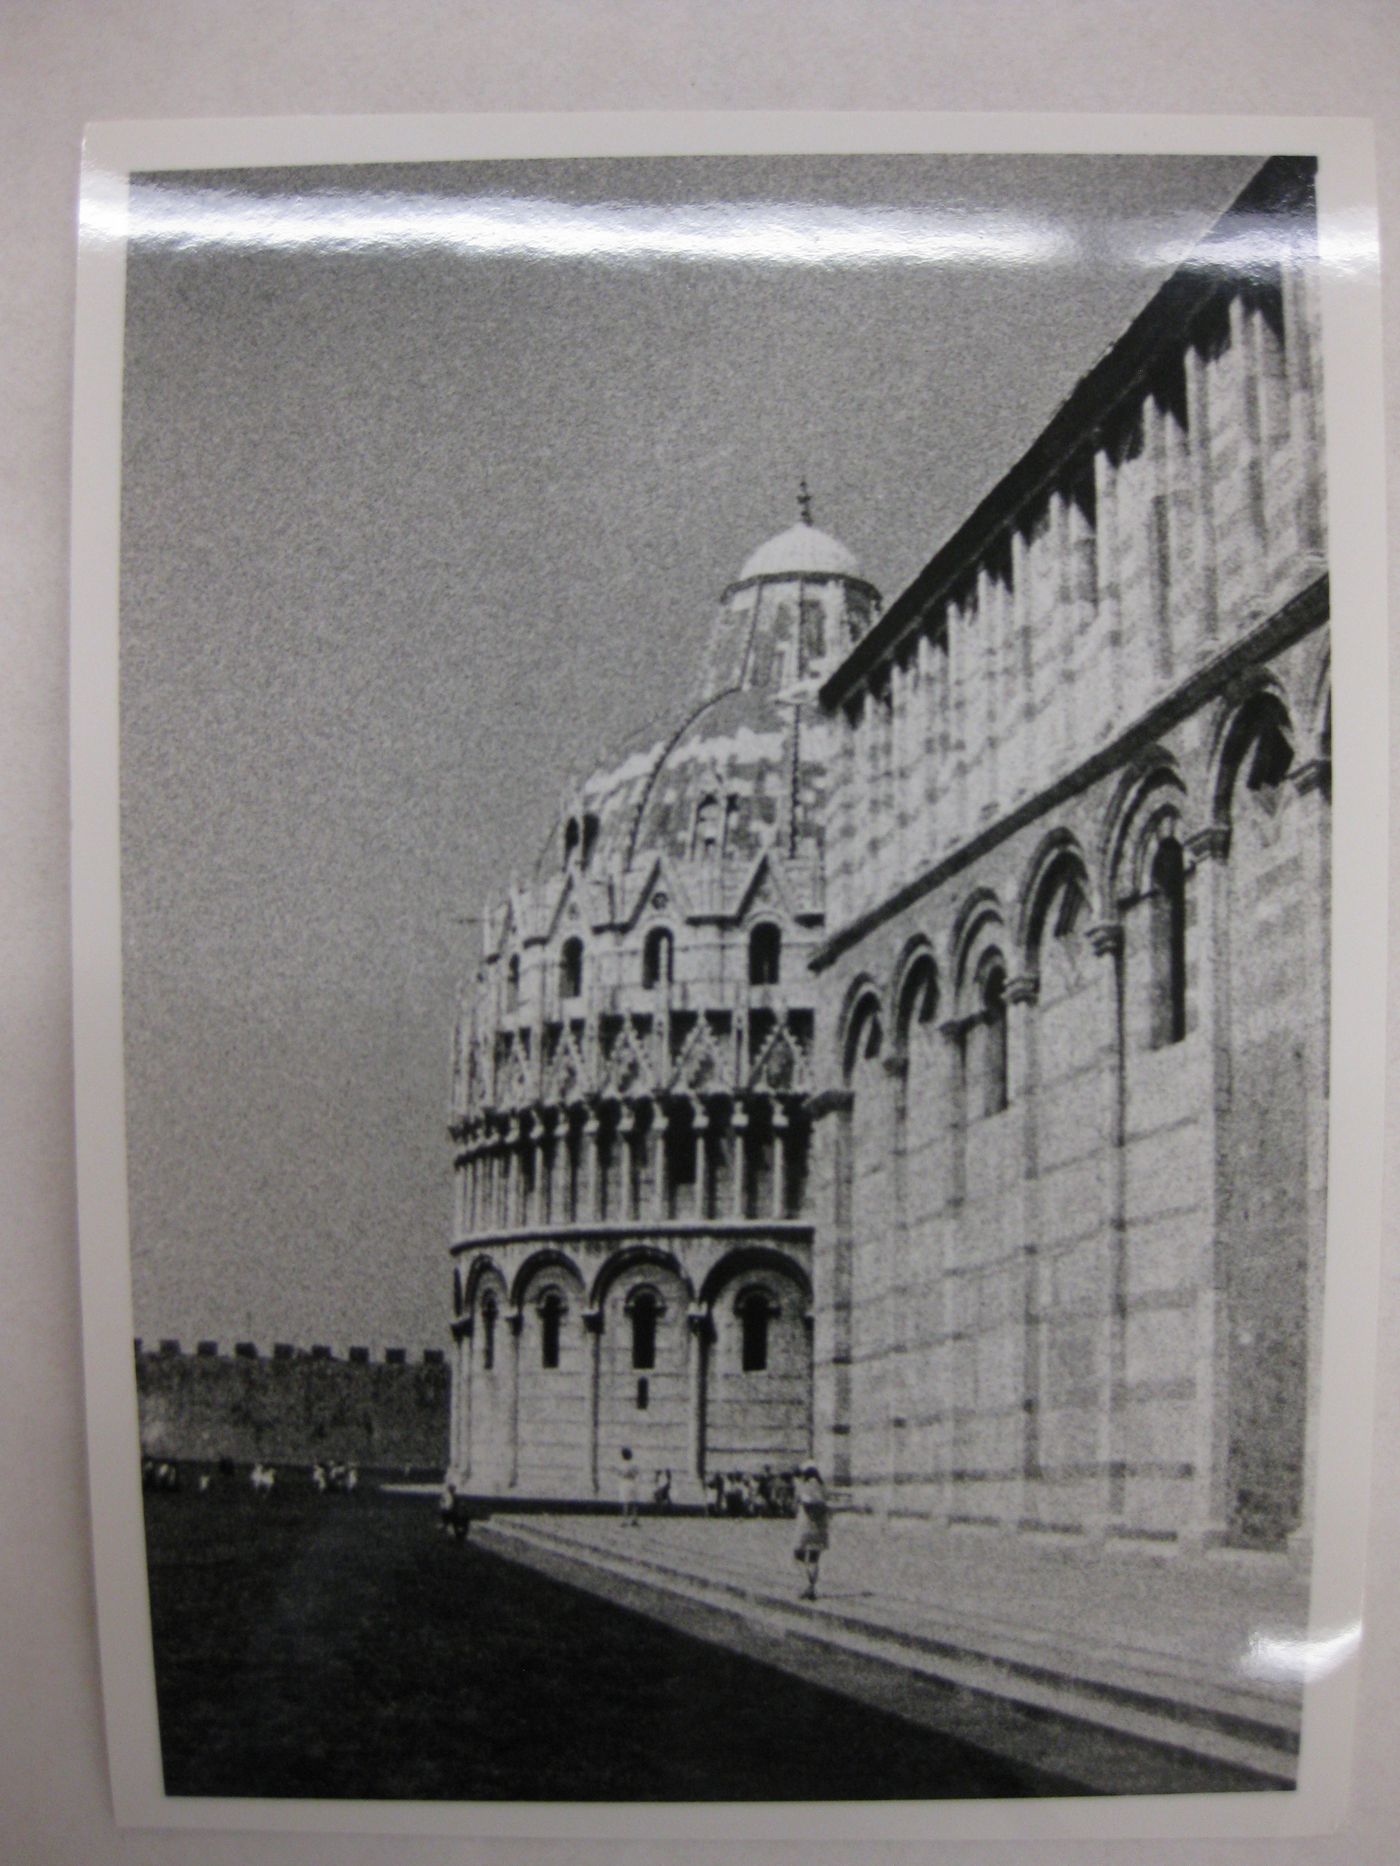 Partial view of the Battistero, Pisa, Italy